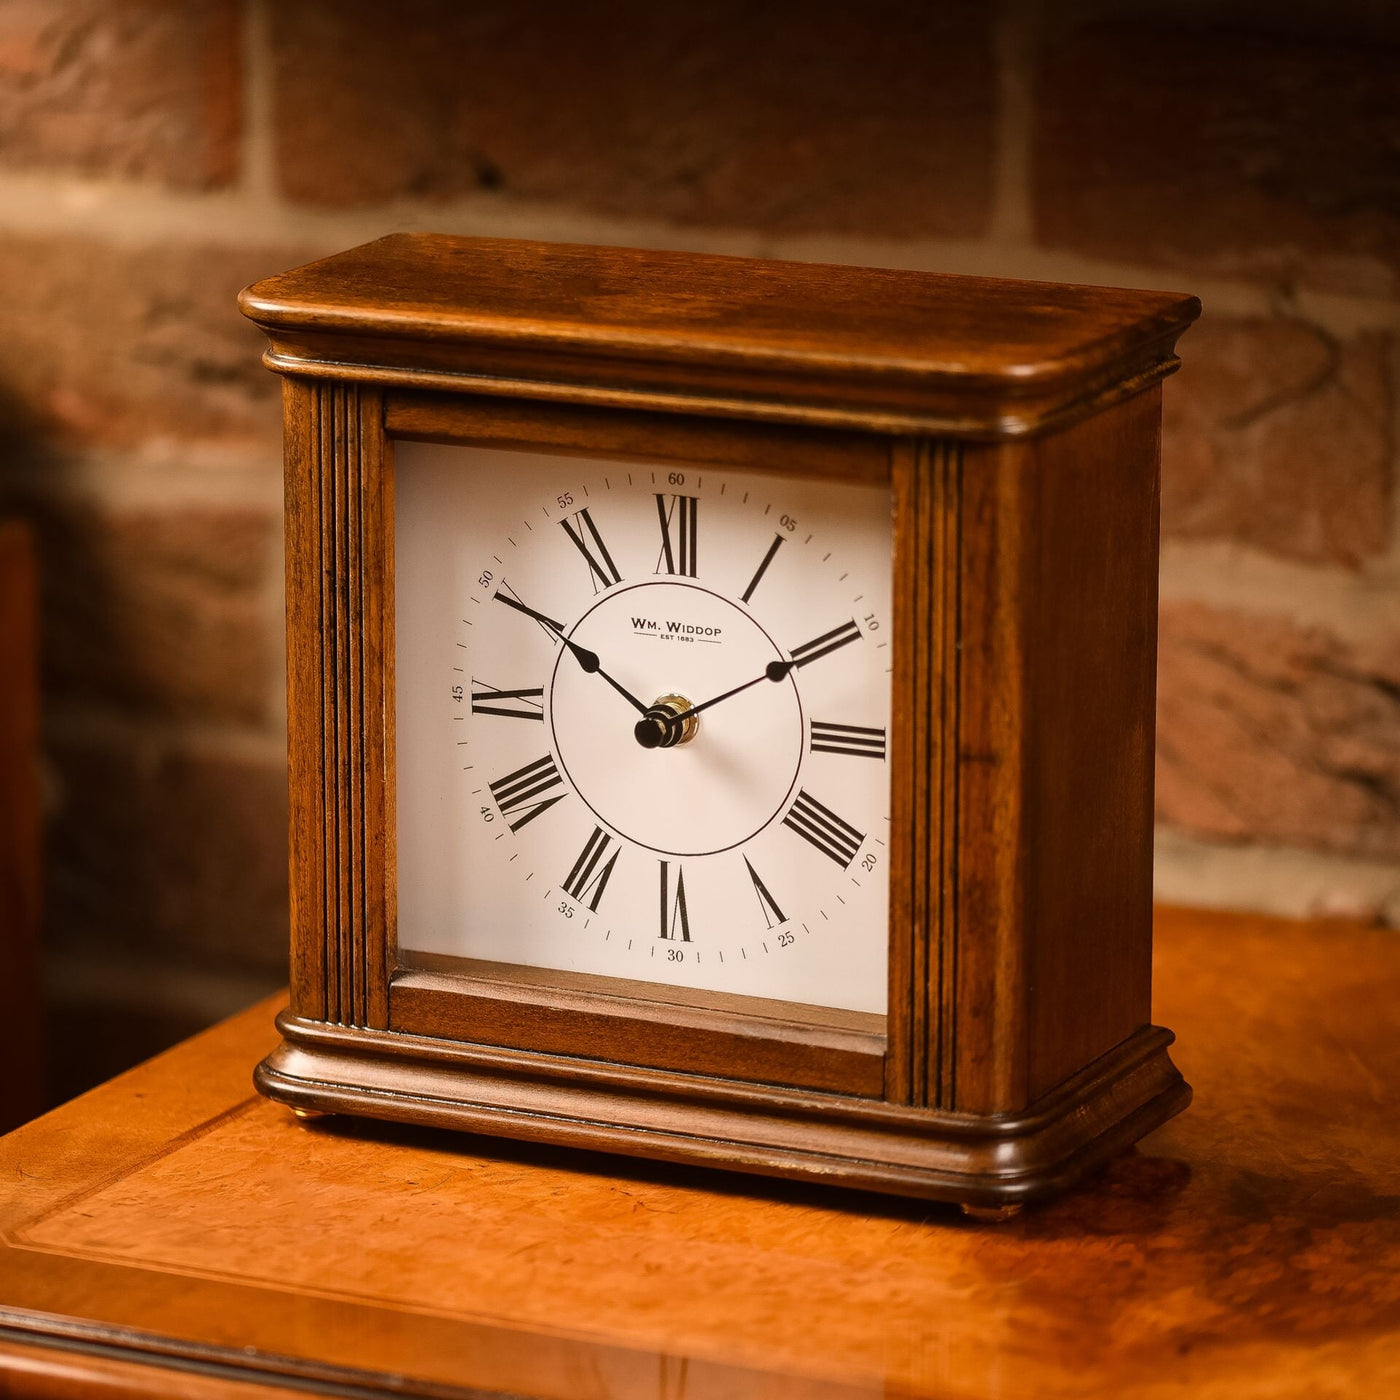 WM.Widdop. Wooden Square Mantel Clock *NEW* - timeframedclocks